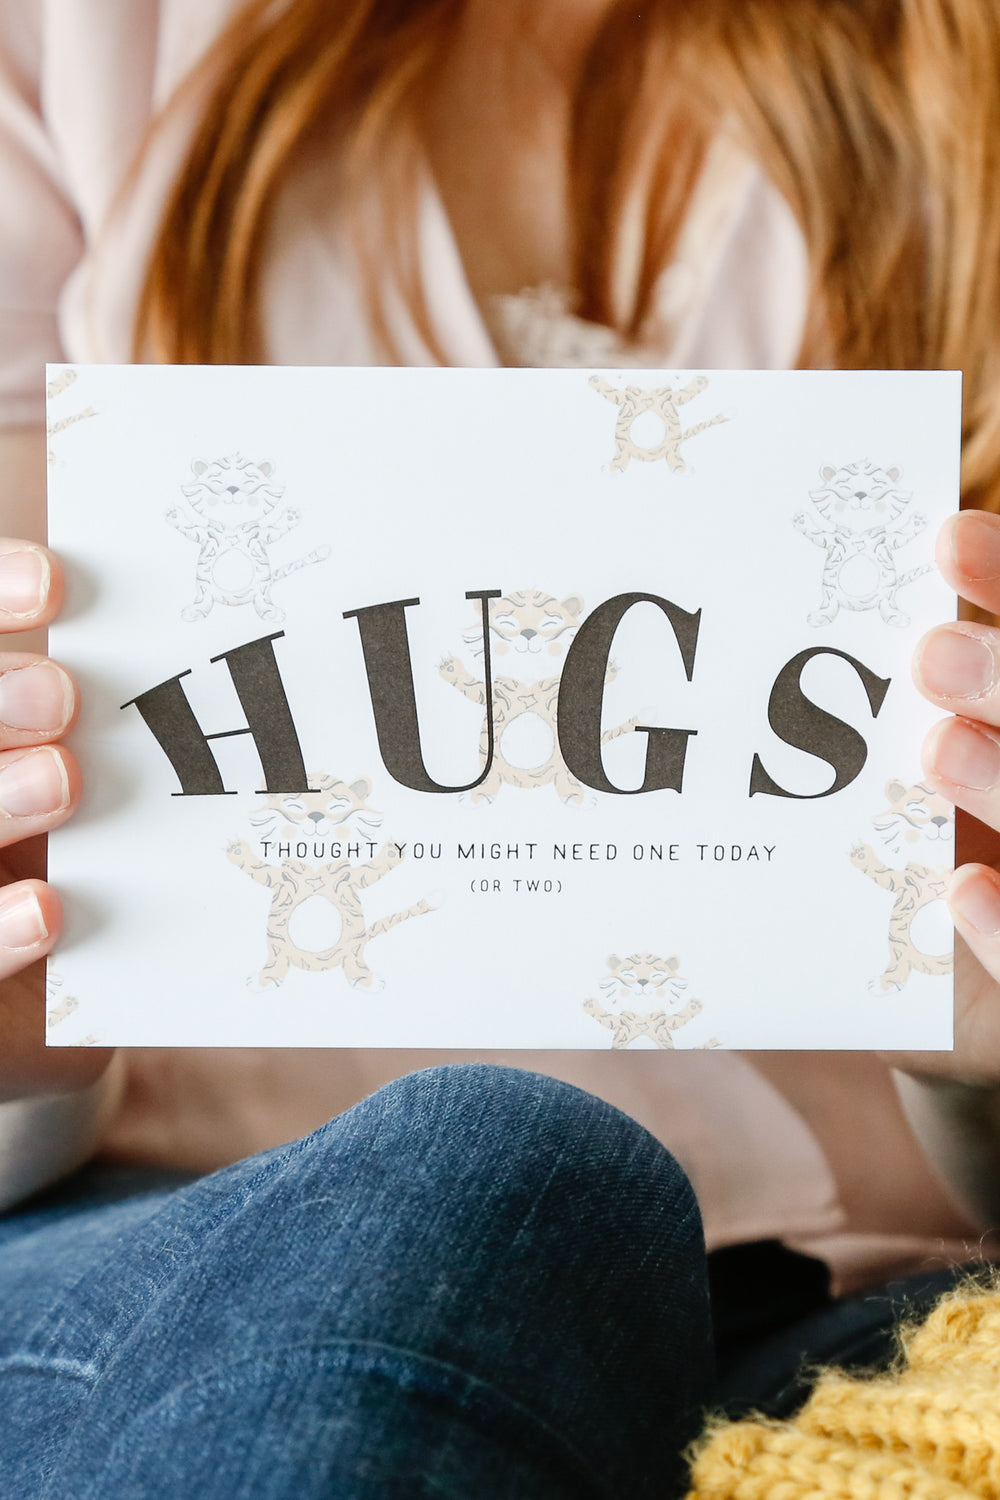 Hugs Greeting Card - Pretty Sick Designs